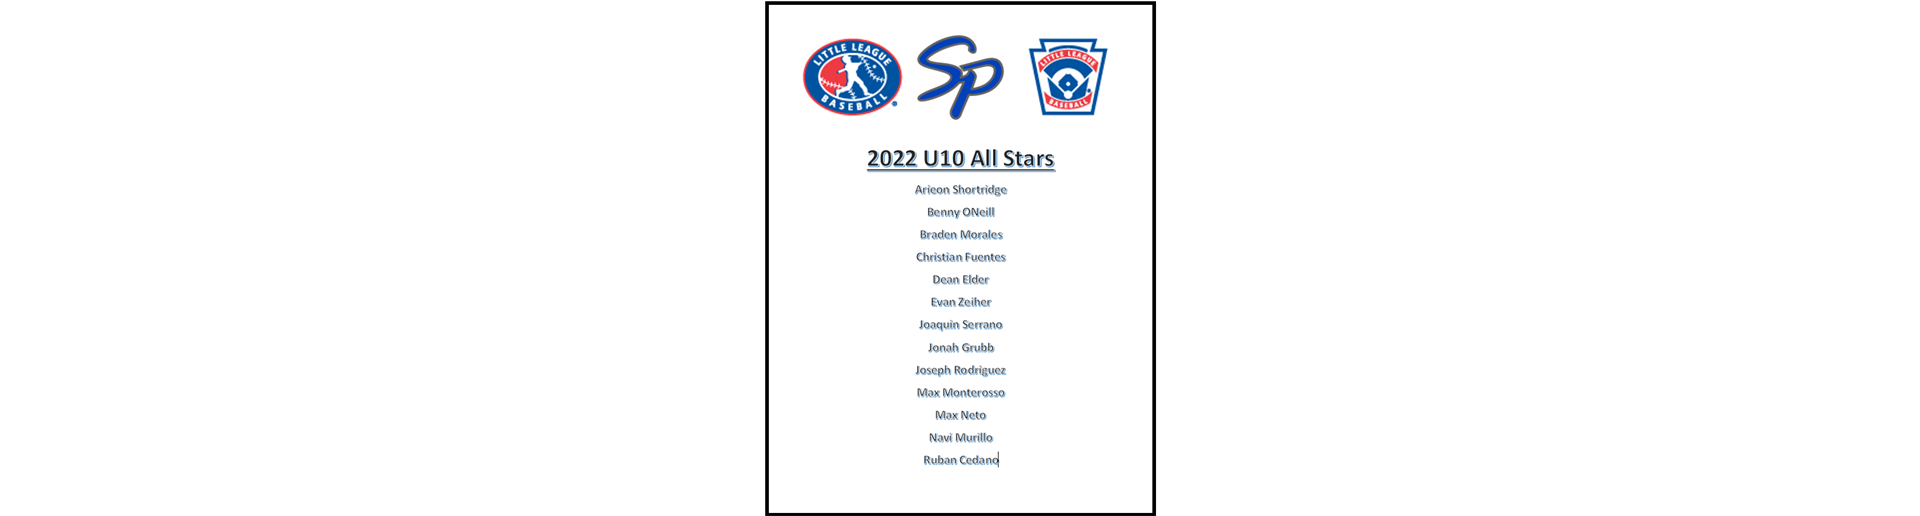 2022 U10 All Star Team